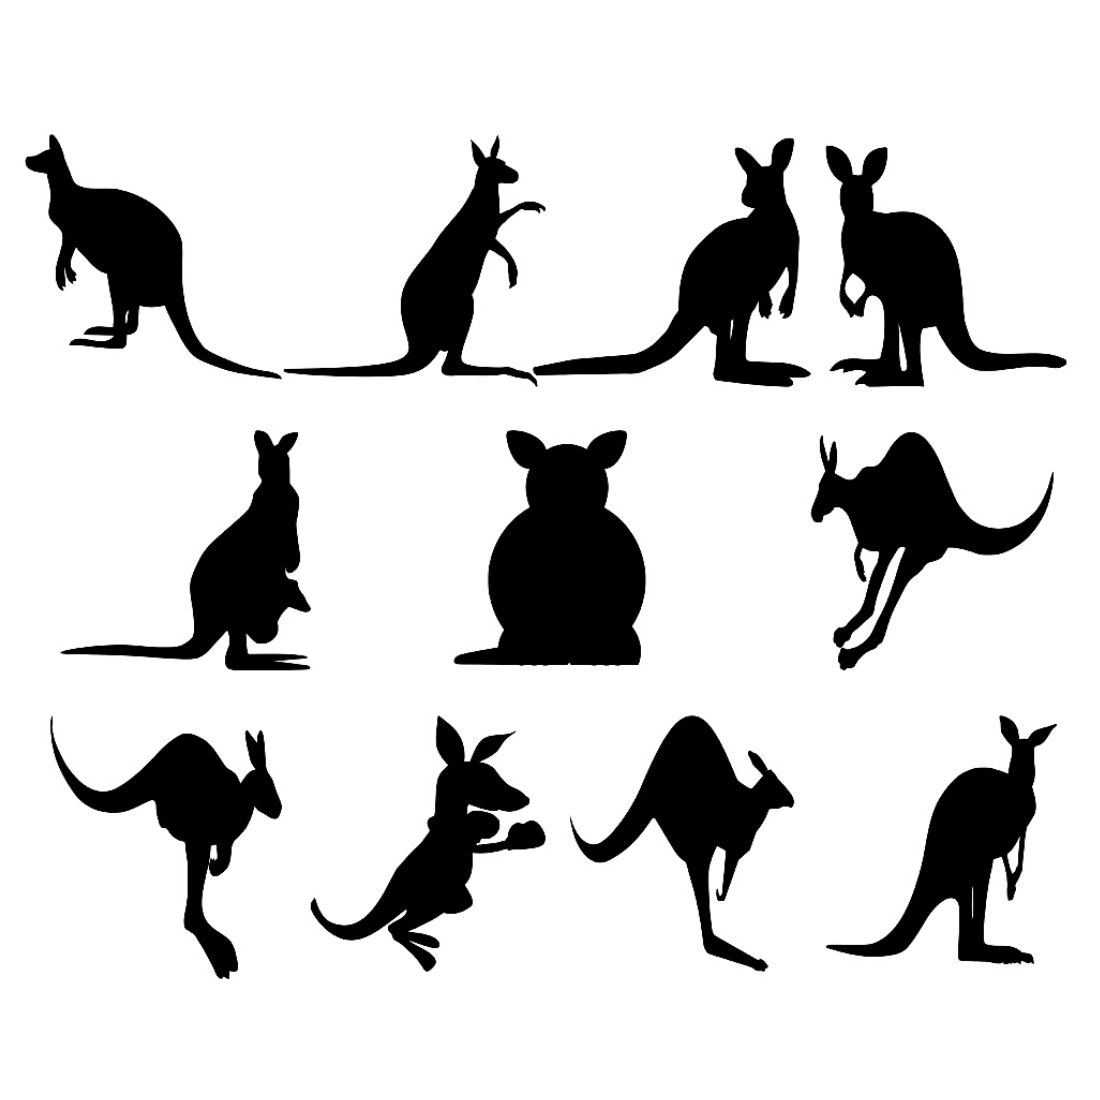 Kangaroo Silhouette Bundles cover image.